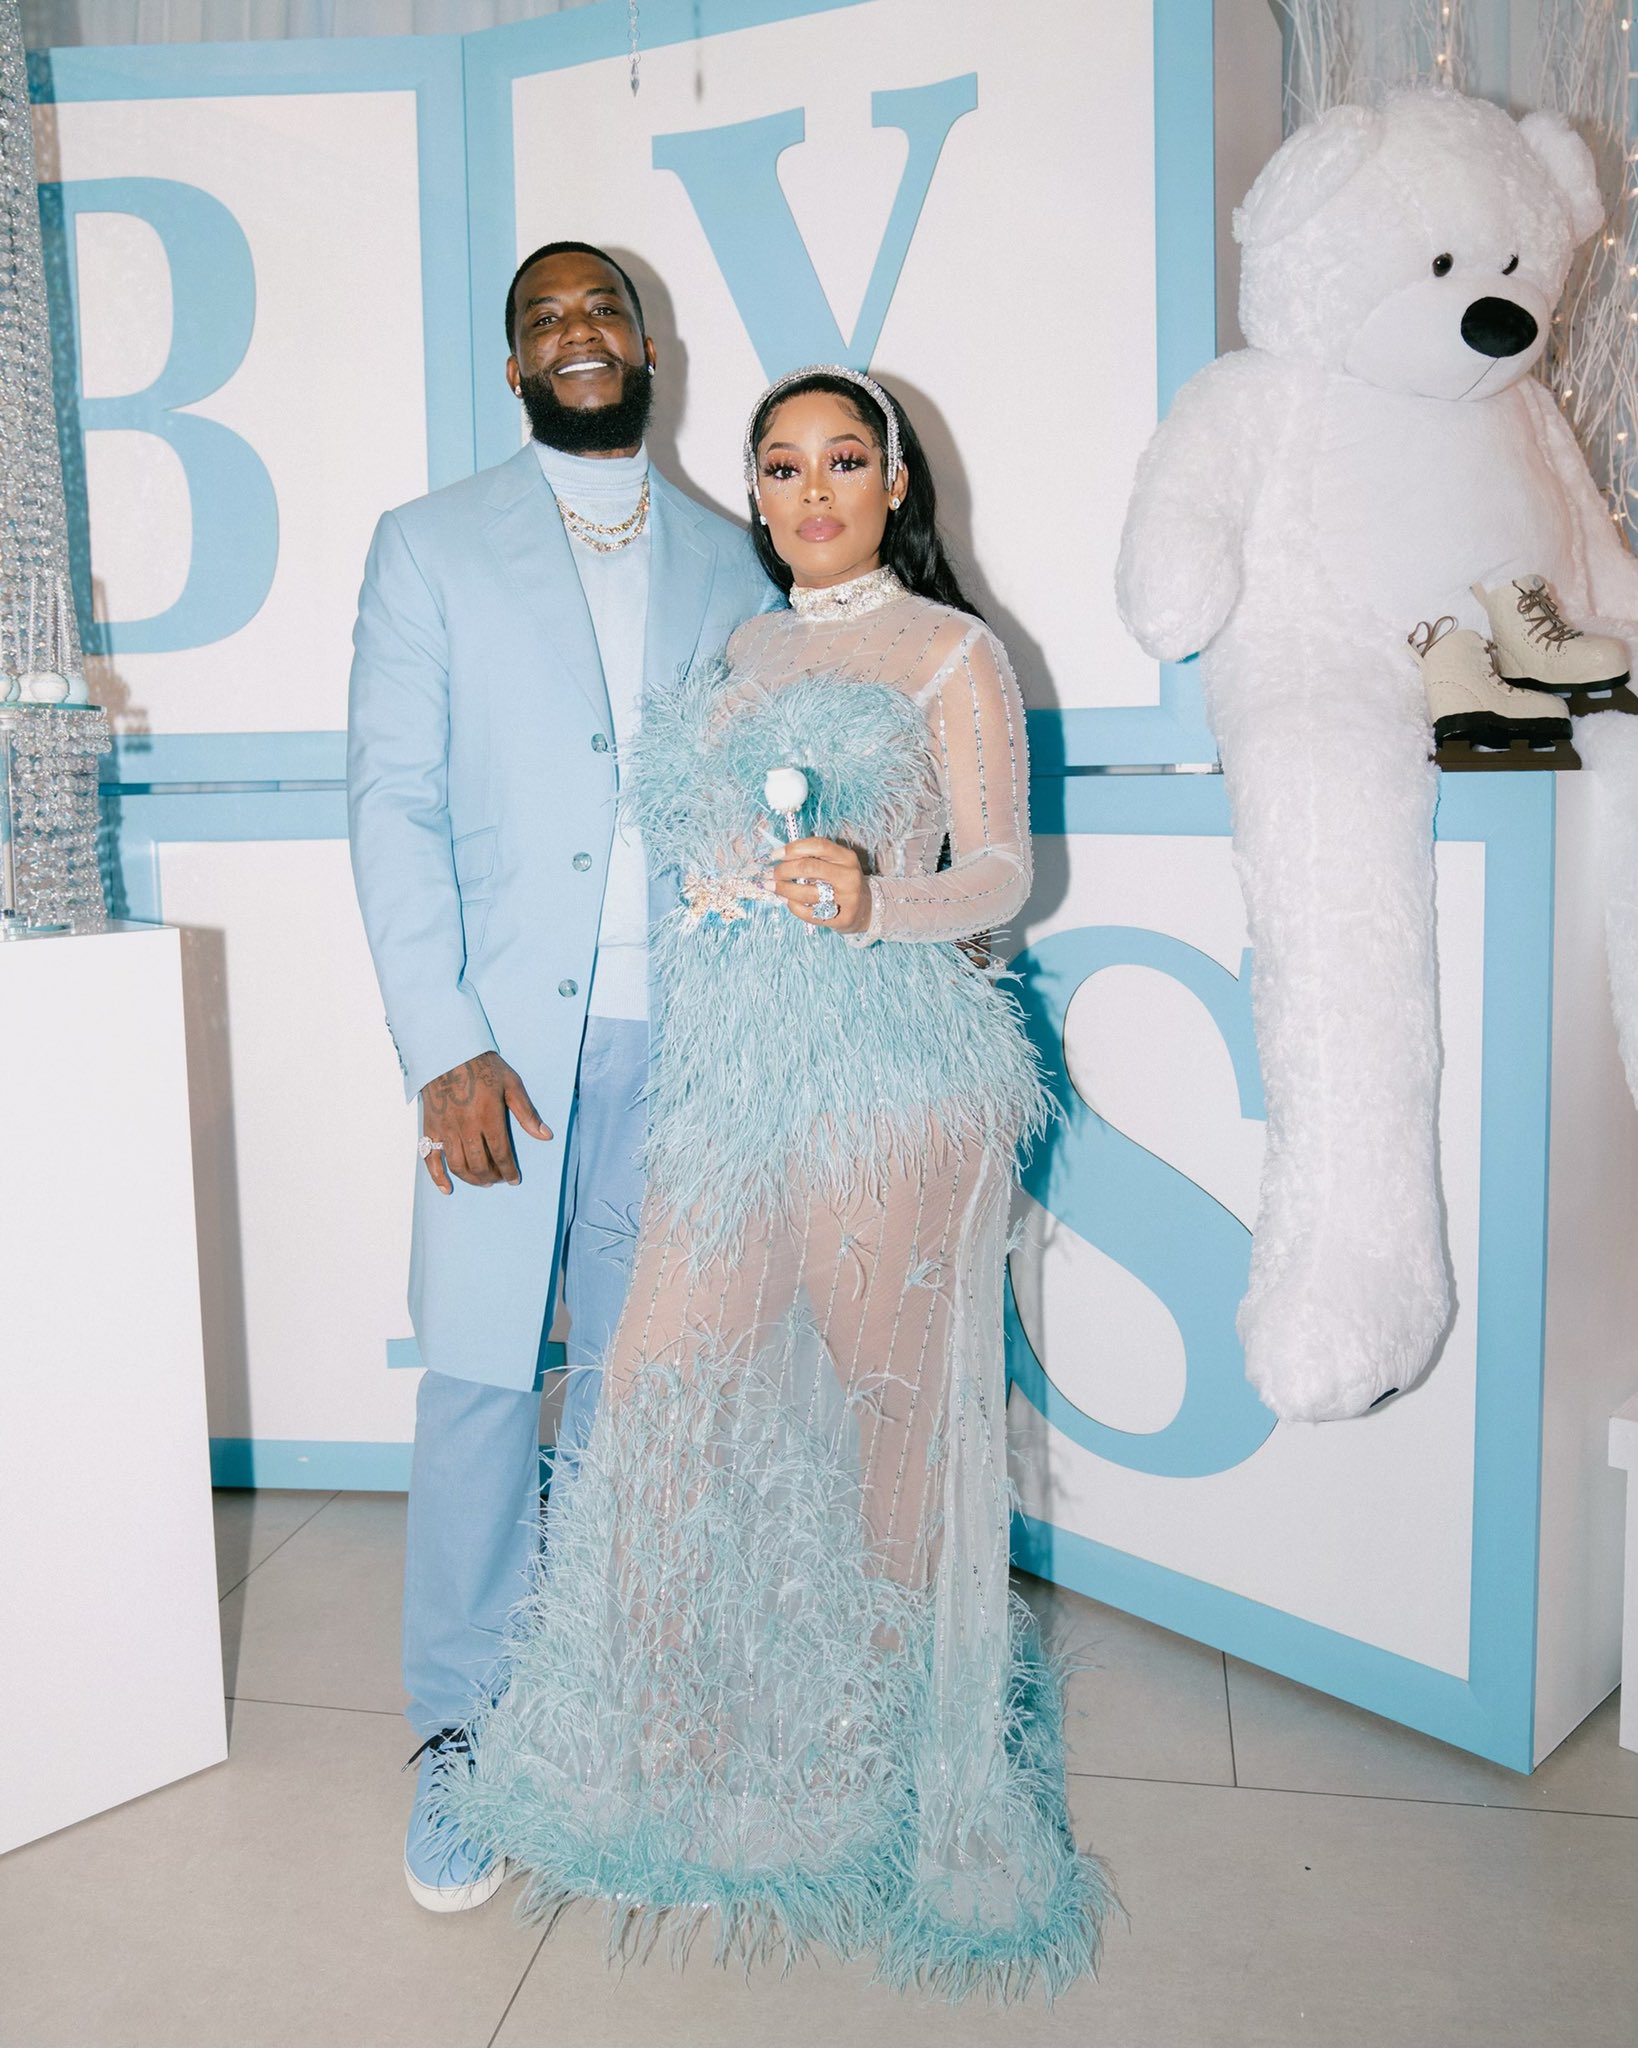 Gucci Mane & Wife Keyshia Ka'oir Have Welcomed their Baby Boy